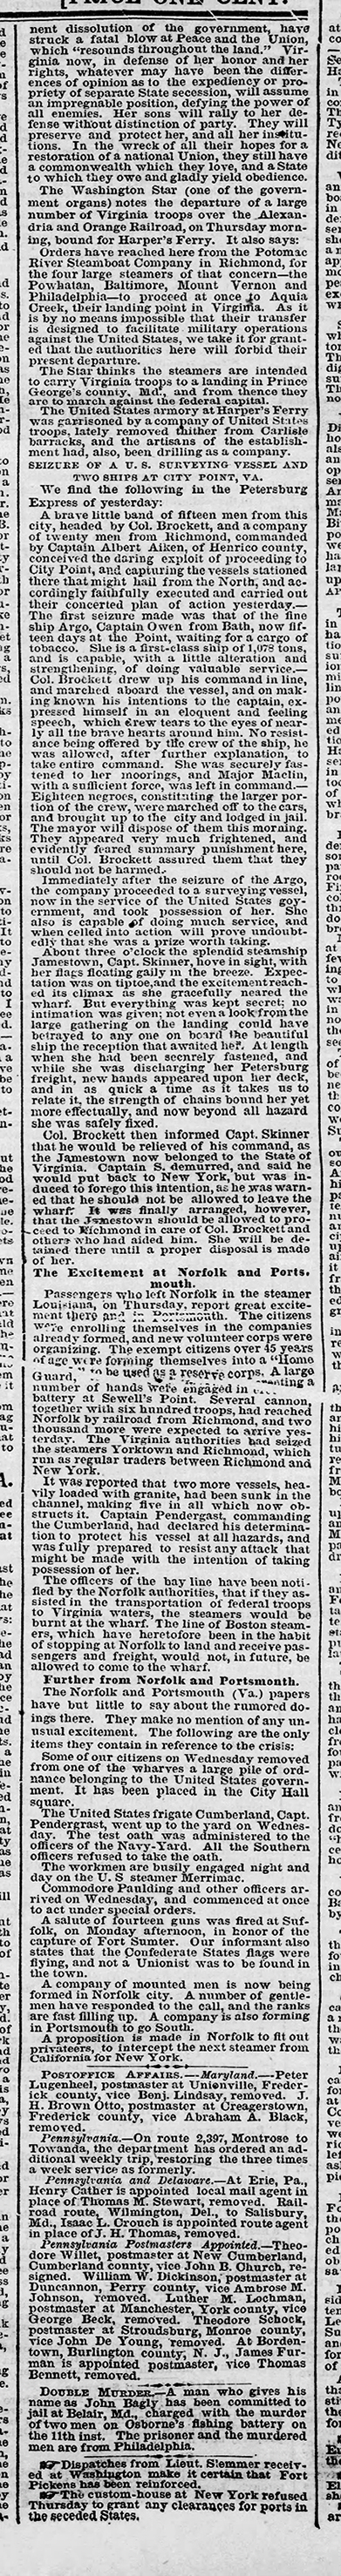 The Baltimore Sun Sat Apr 20 1861 672